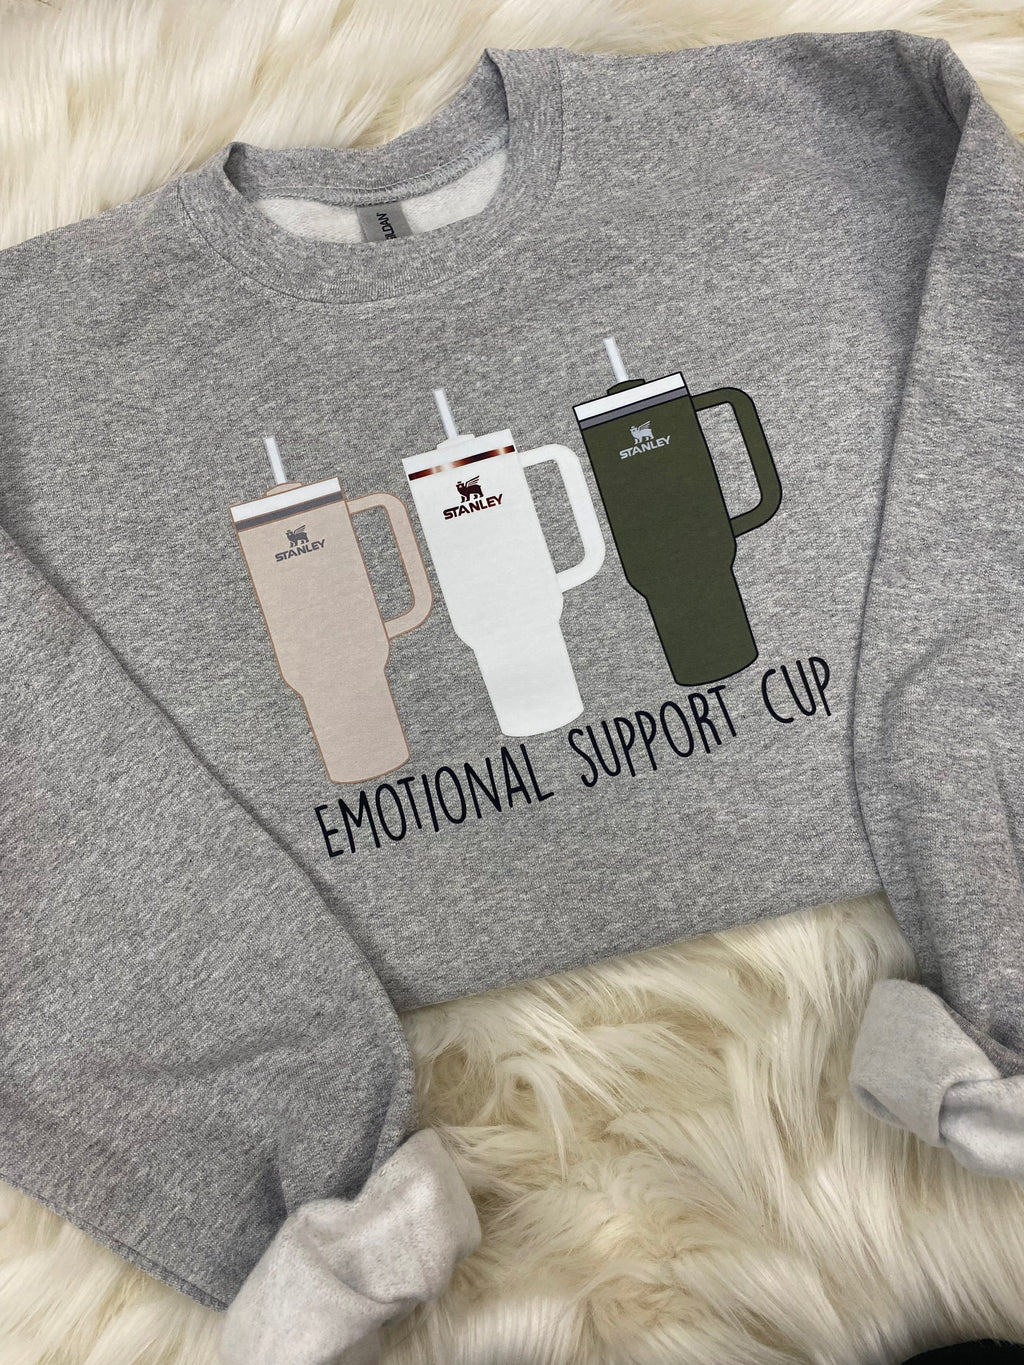 Emotional Support Cup Sweatshirt